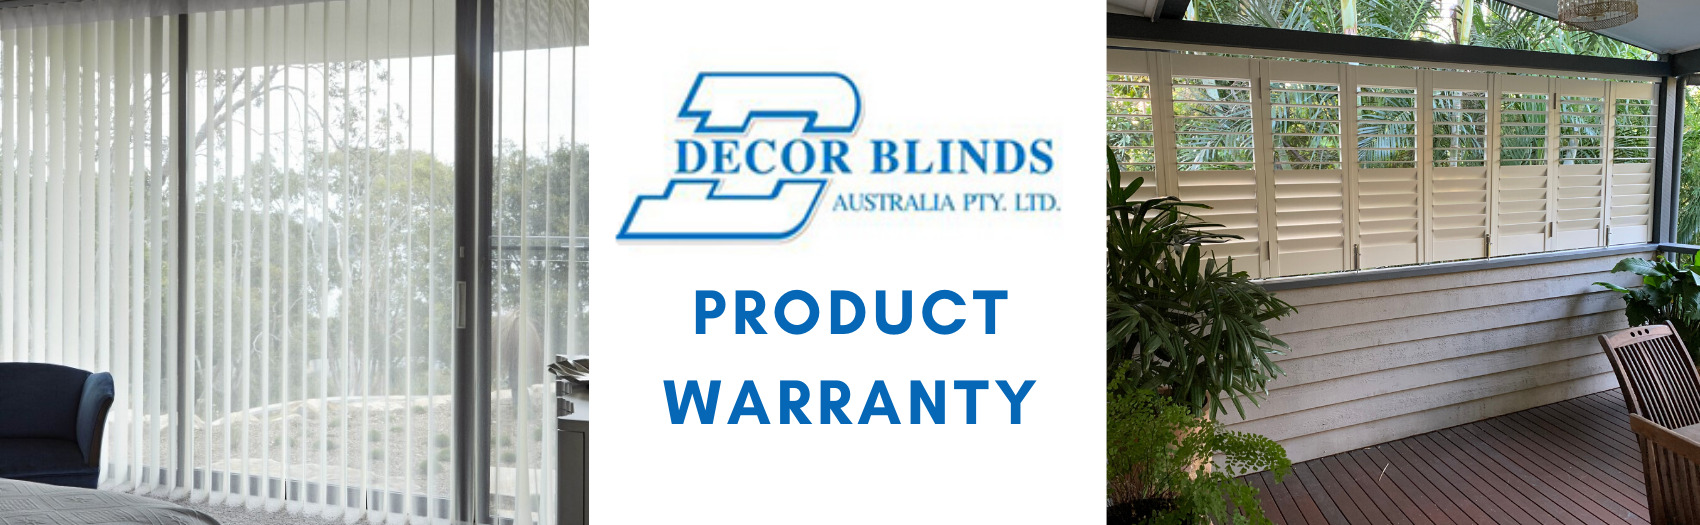 decor blinds brisbane product warranty